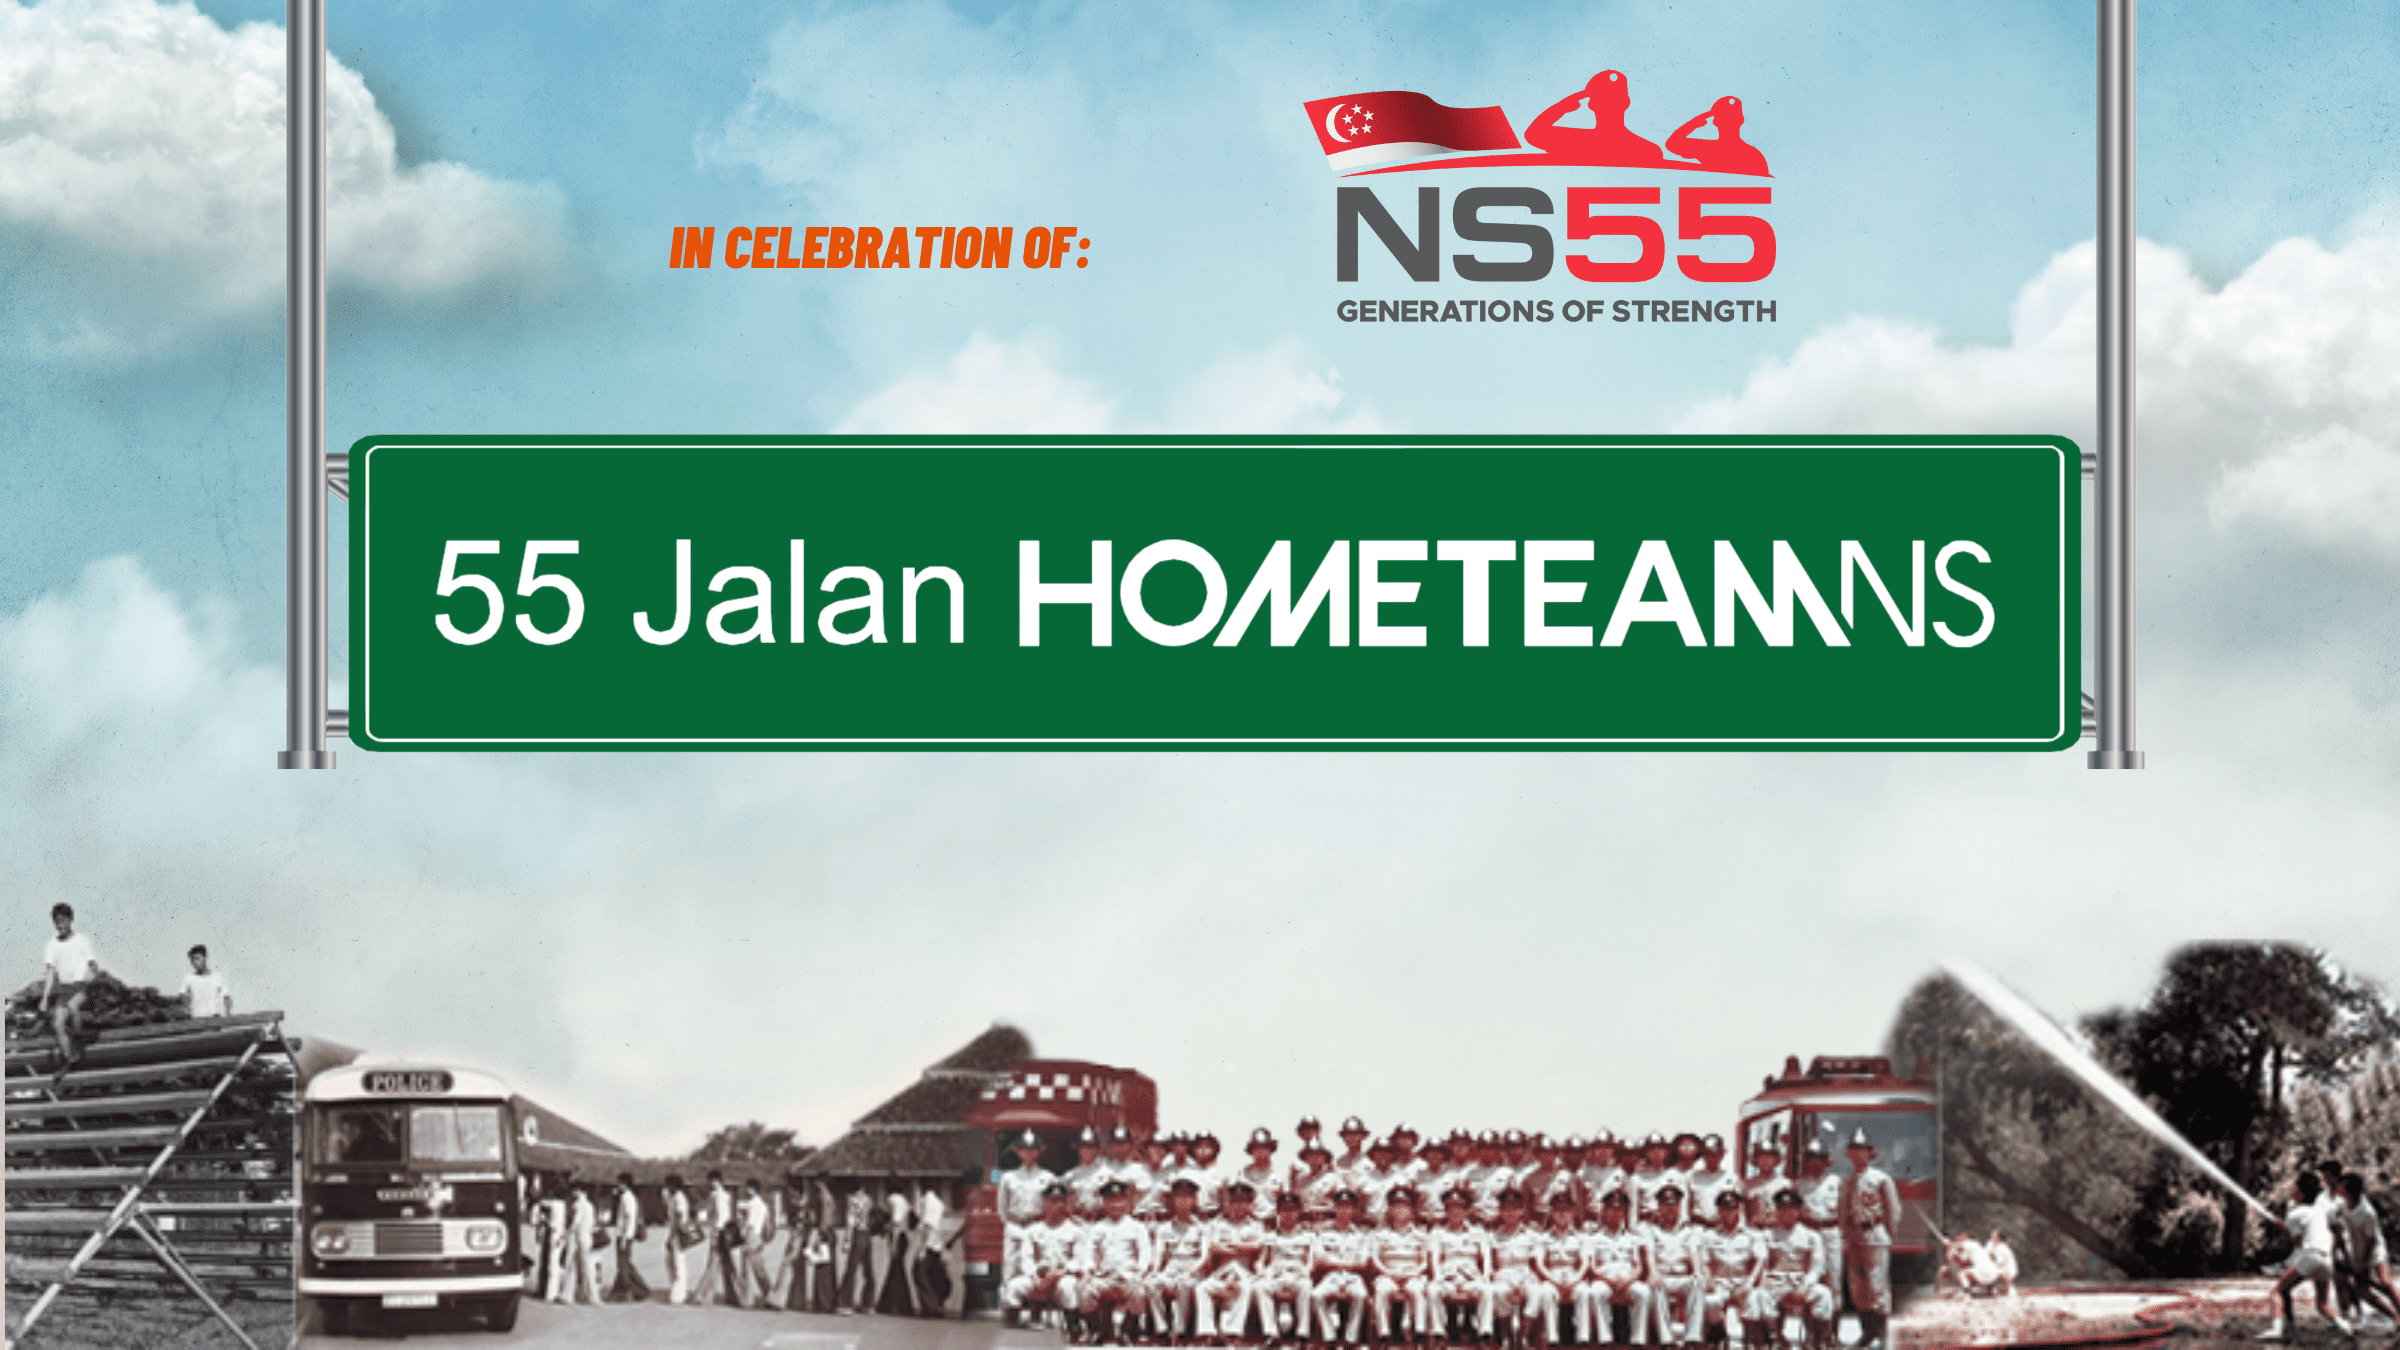 55 Jalan HomeTeamNS (Online Edition)